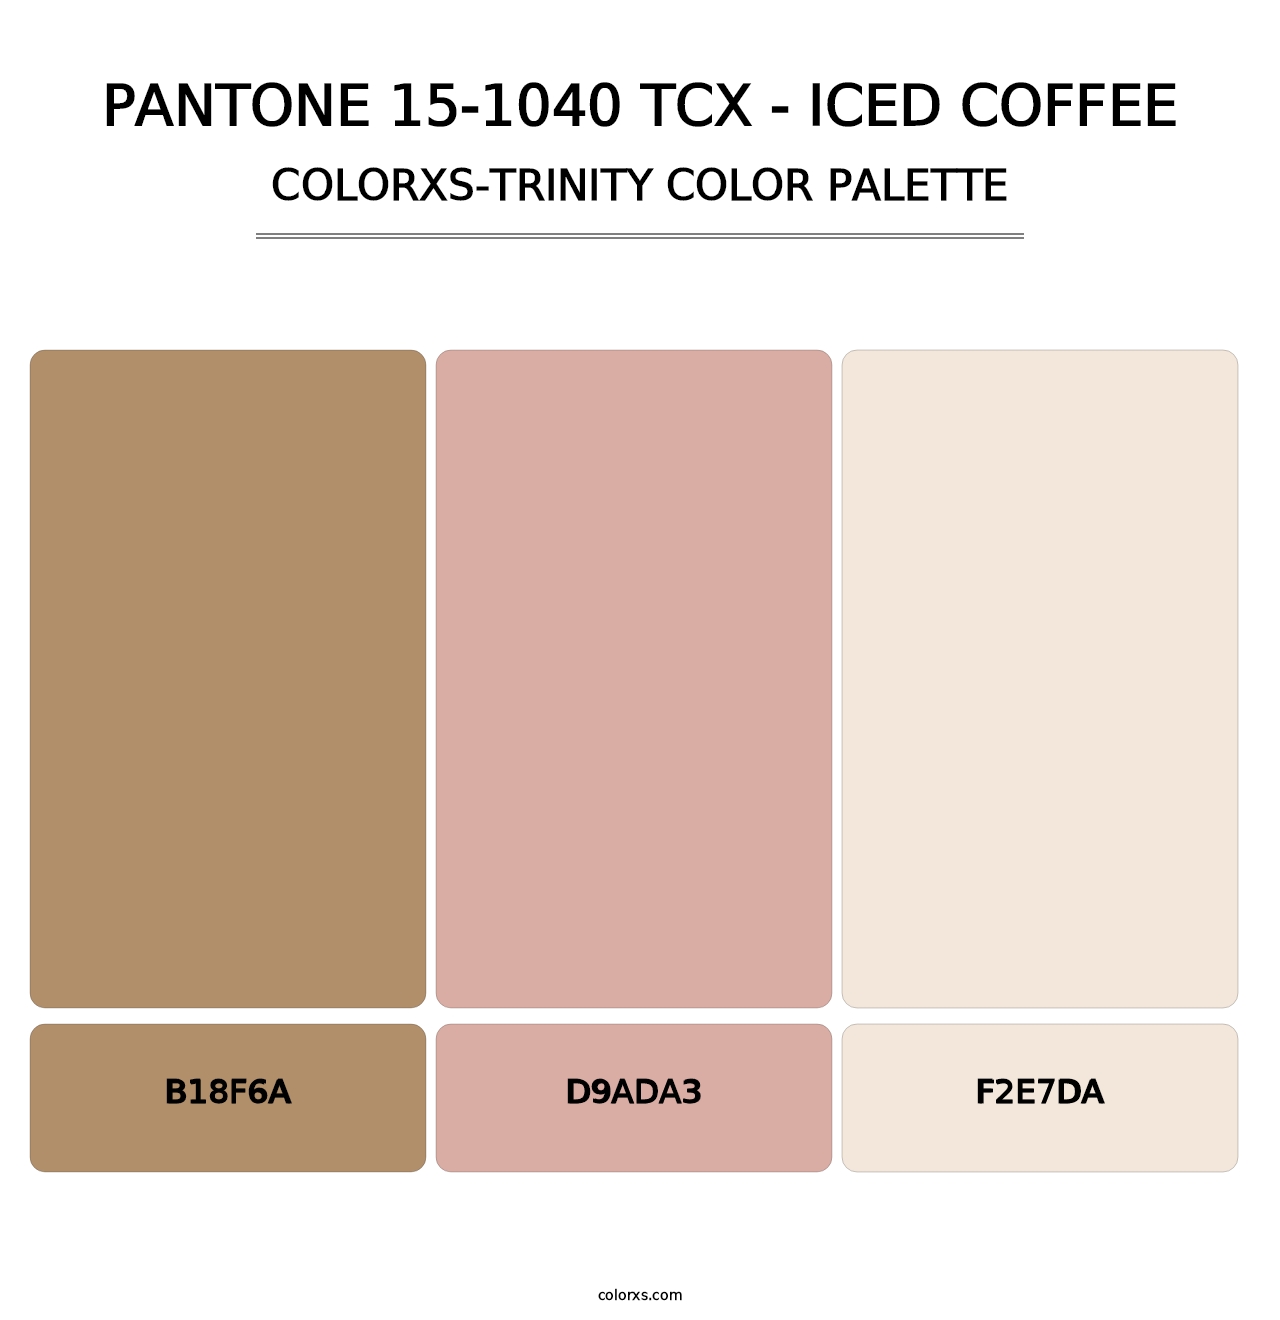 PANTONE 15-1040 TCX - Iced Coffee - Colorxs Trinity Palette